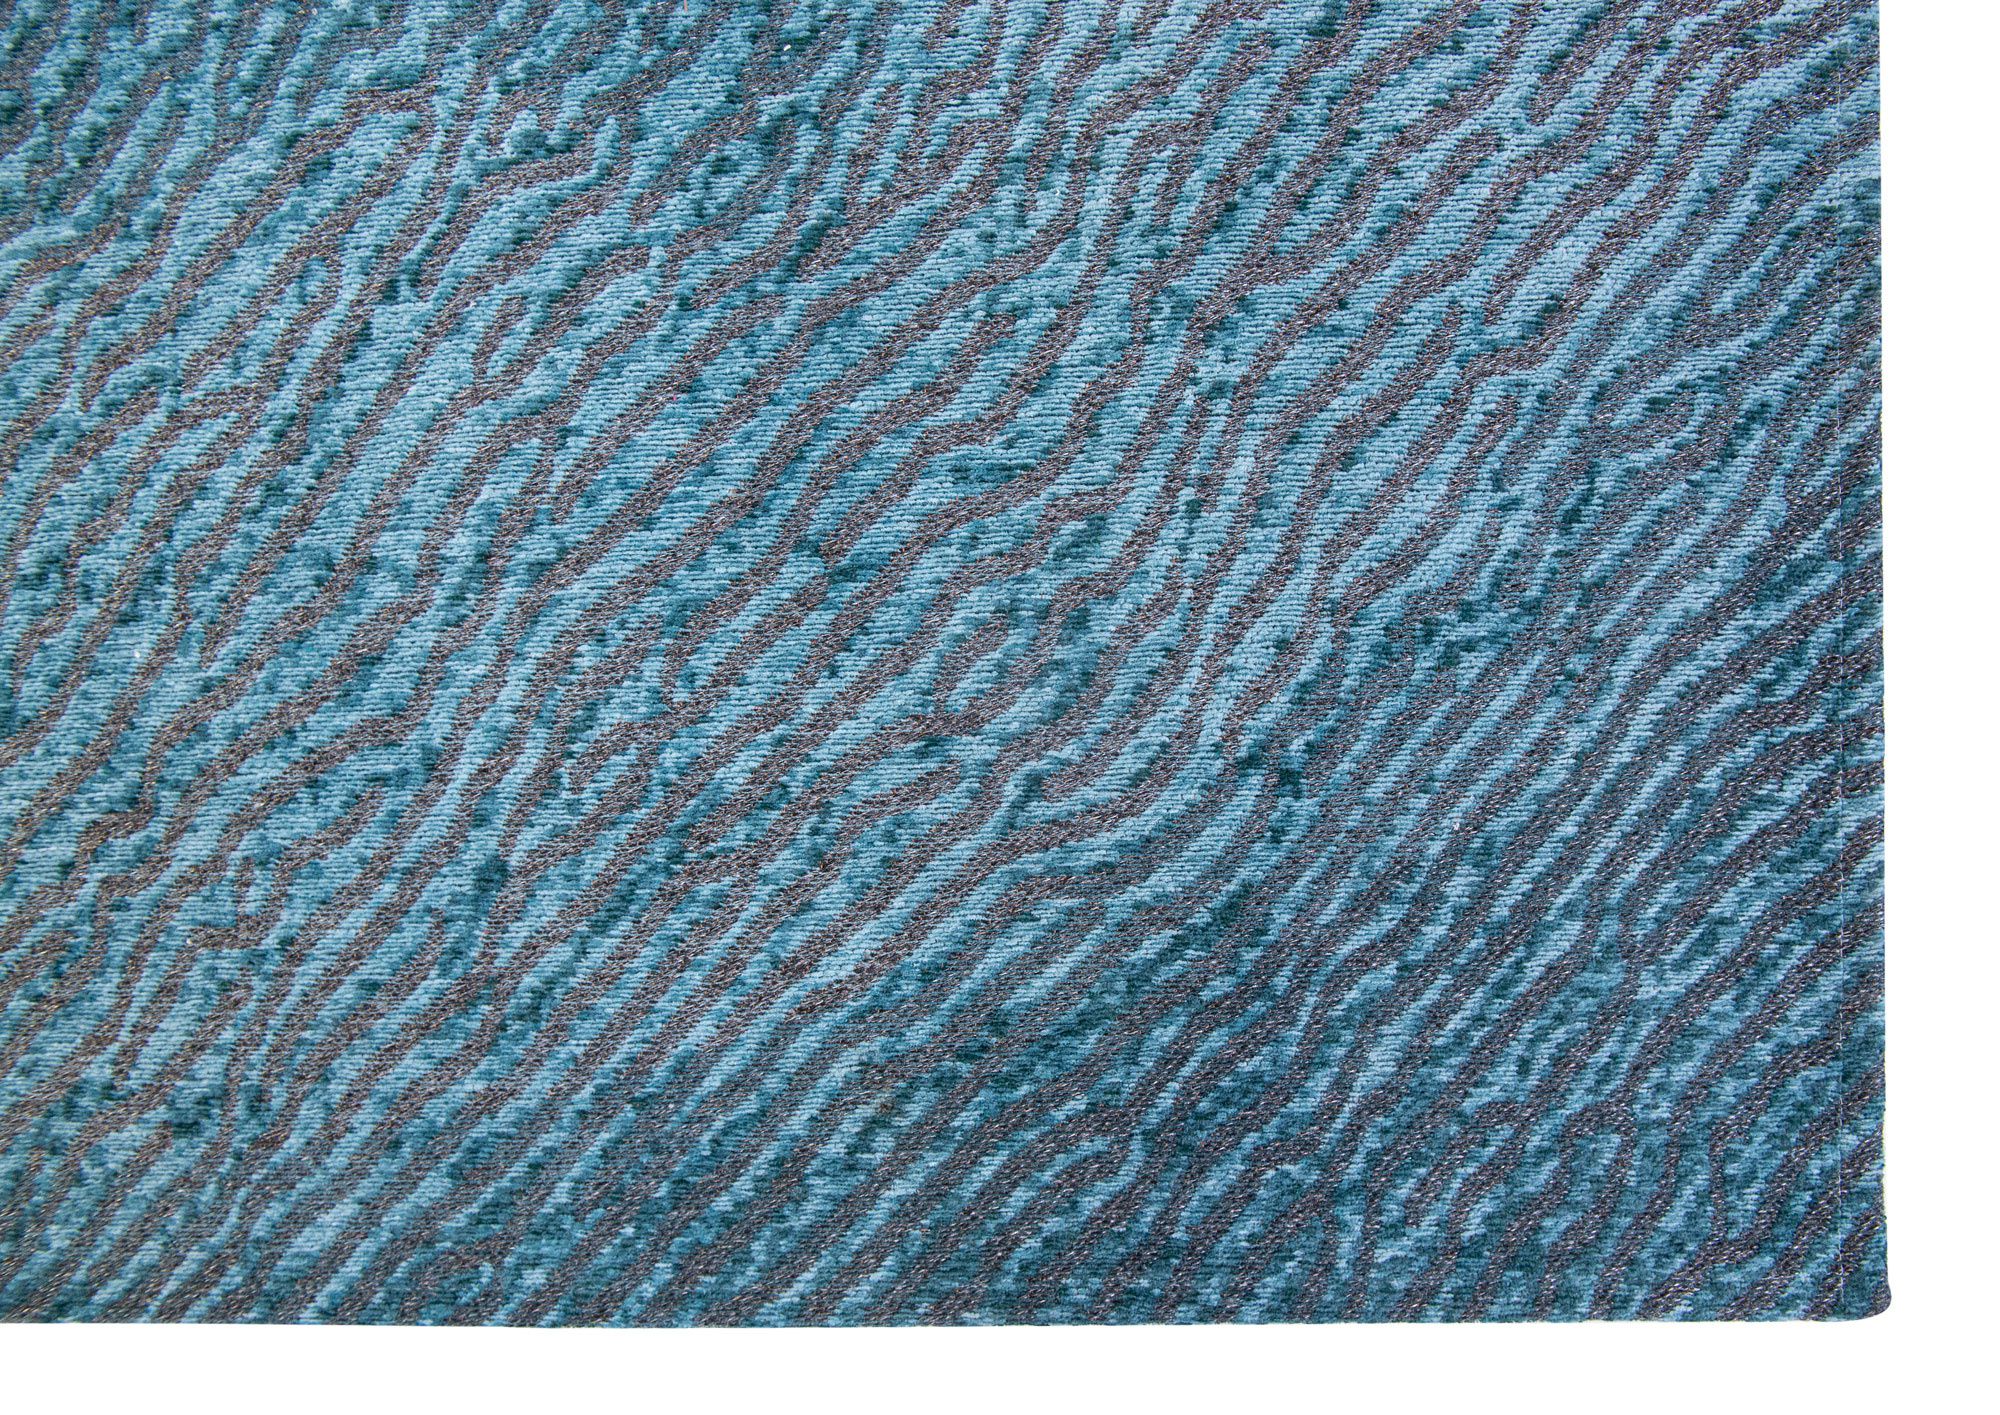 vloerkleed louis de poortere shores waves blue nile 280cm x 360cm